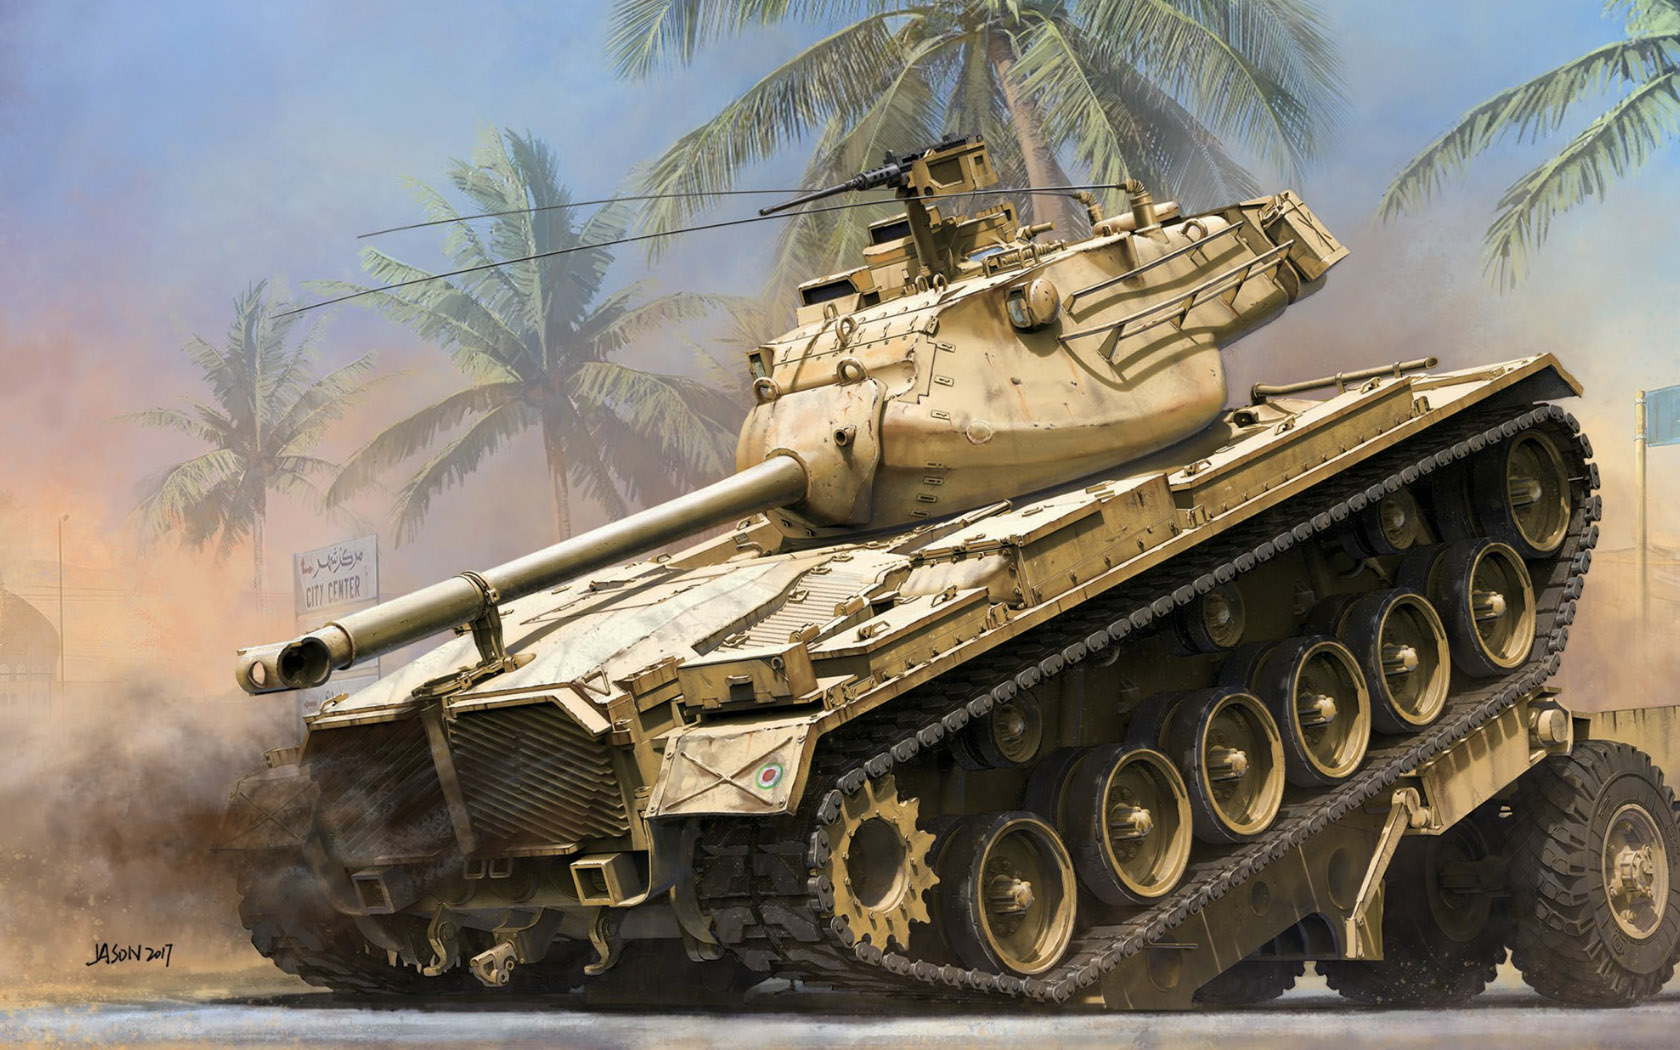 General 1680x1050 tank army military military vehicle palm trees artwork American tanks